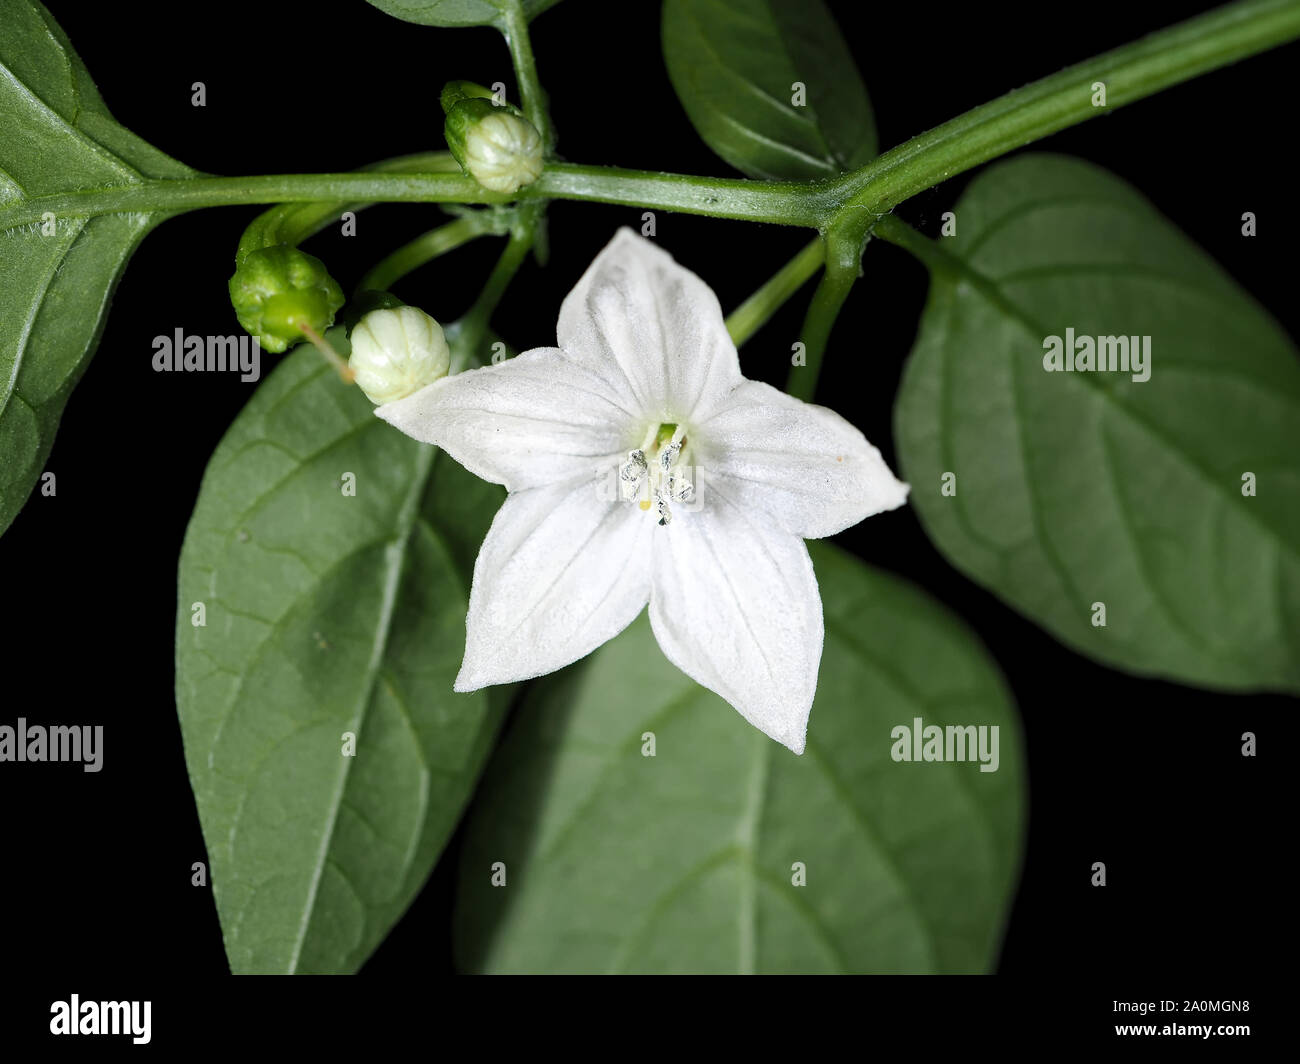 White hot pepper flower (Capsicum annuum cultivar) close-up Stock Photo